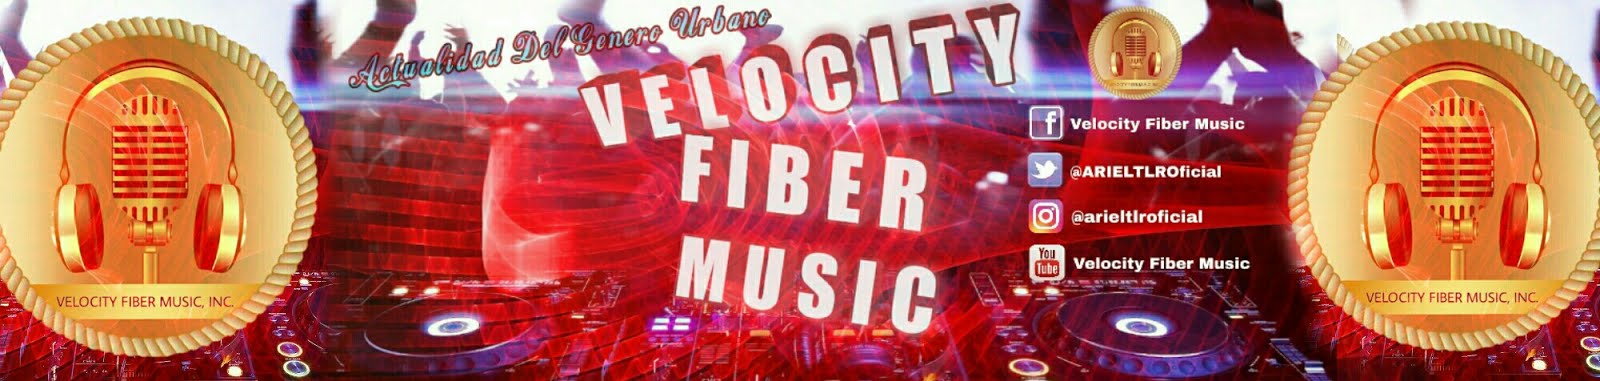 Velocity Fiber Music